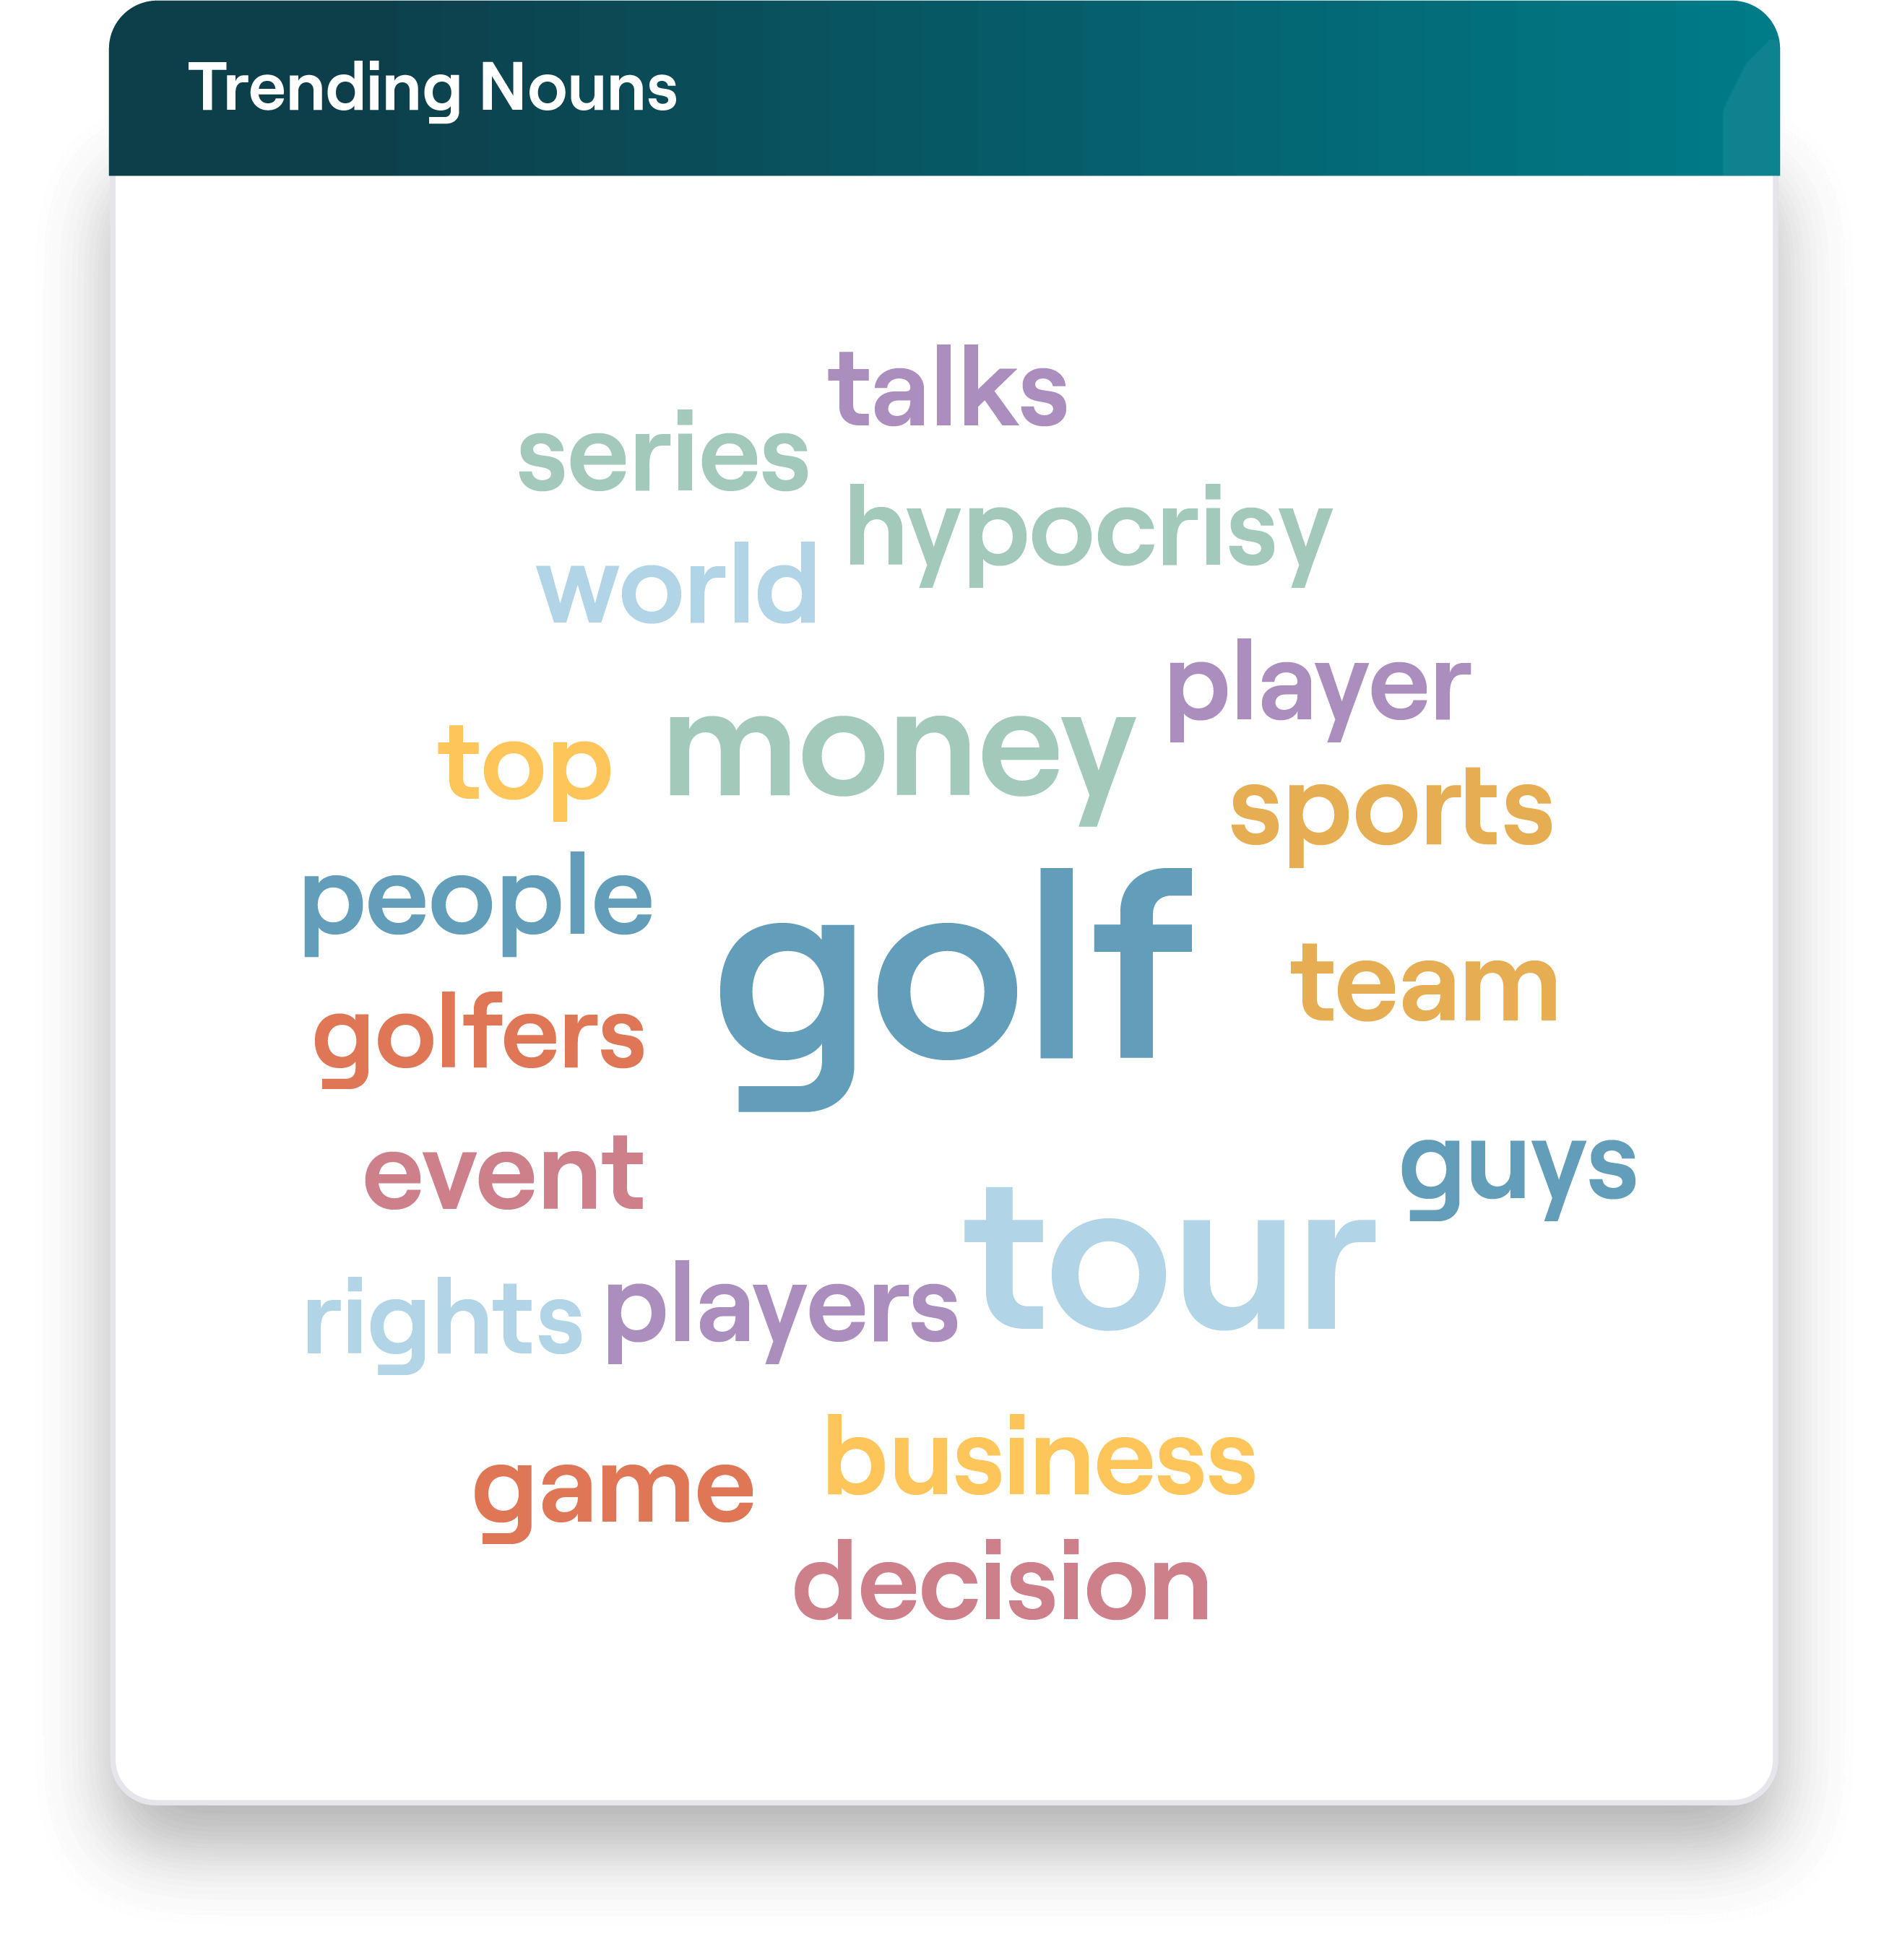 Trending nouns golf tour